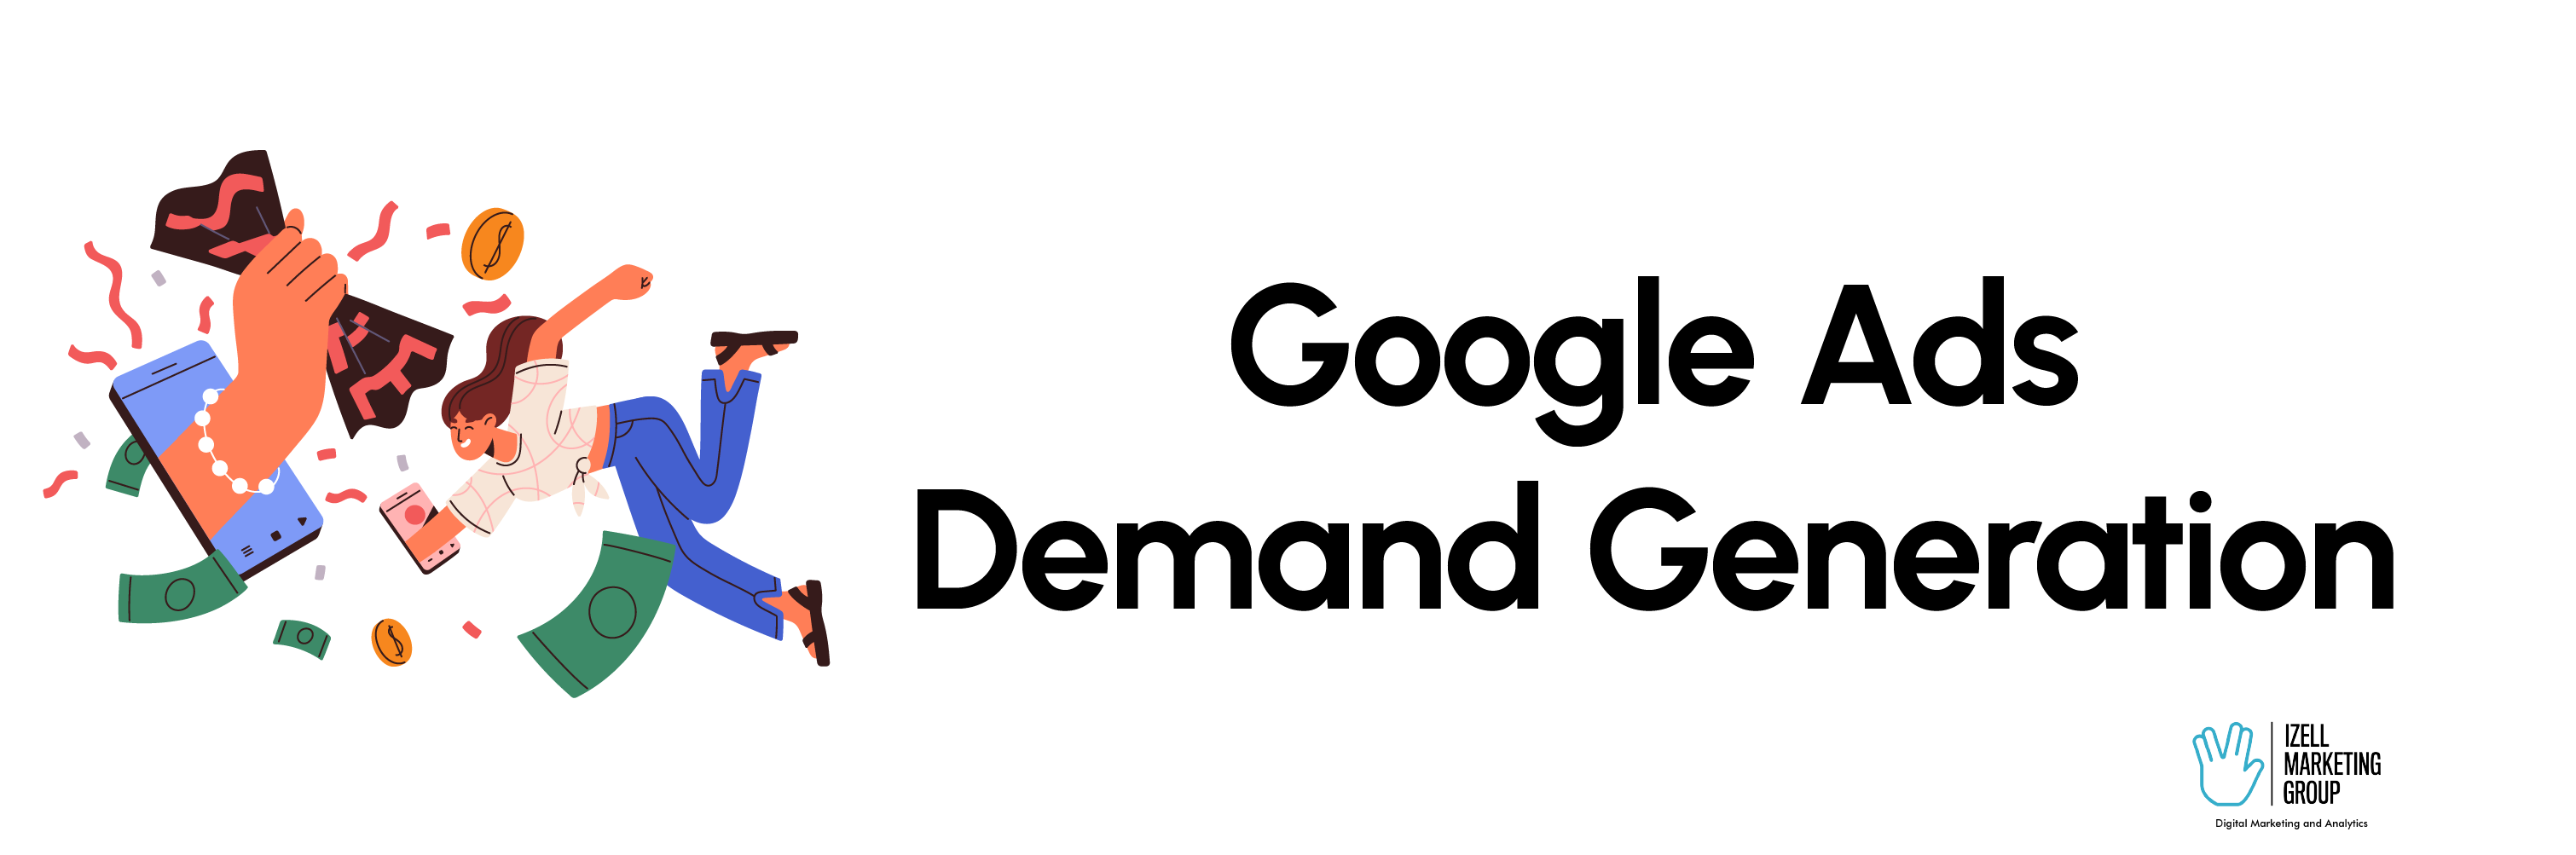 Google Ads Demand Generation graphic